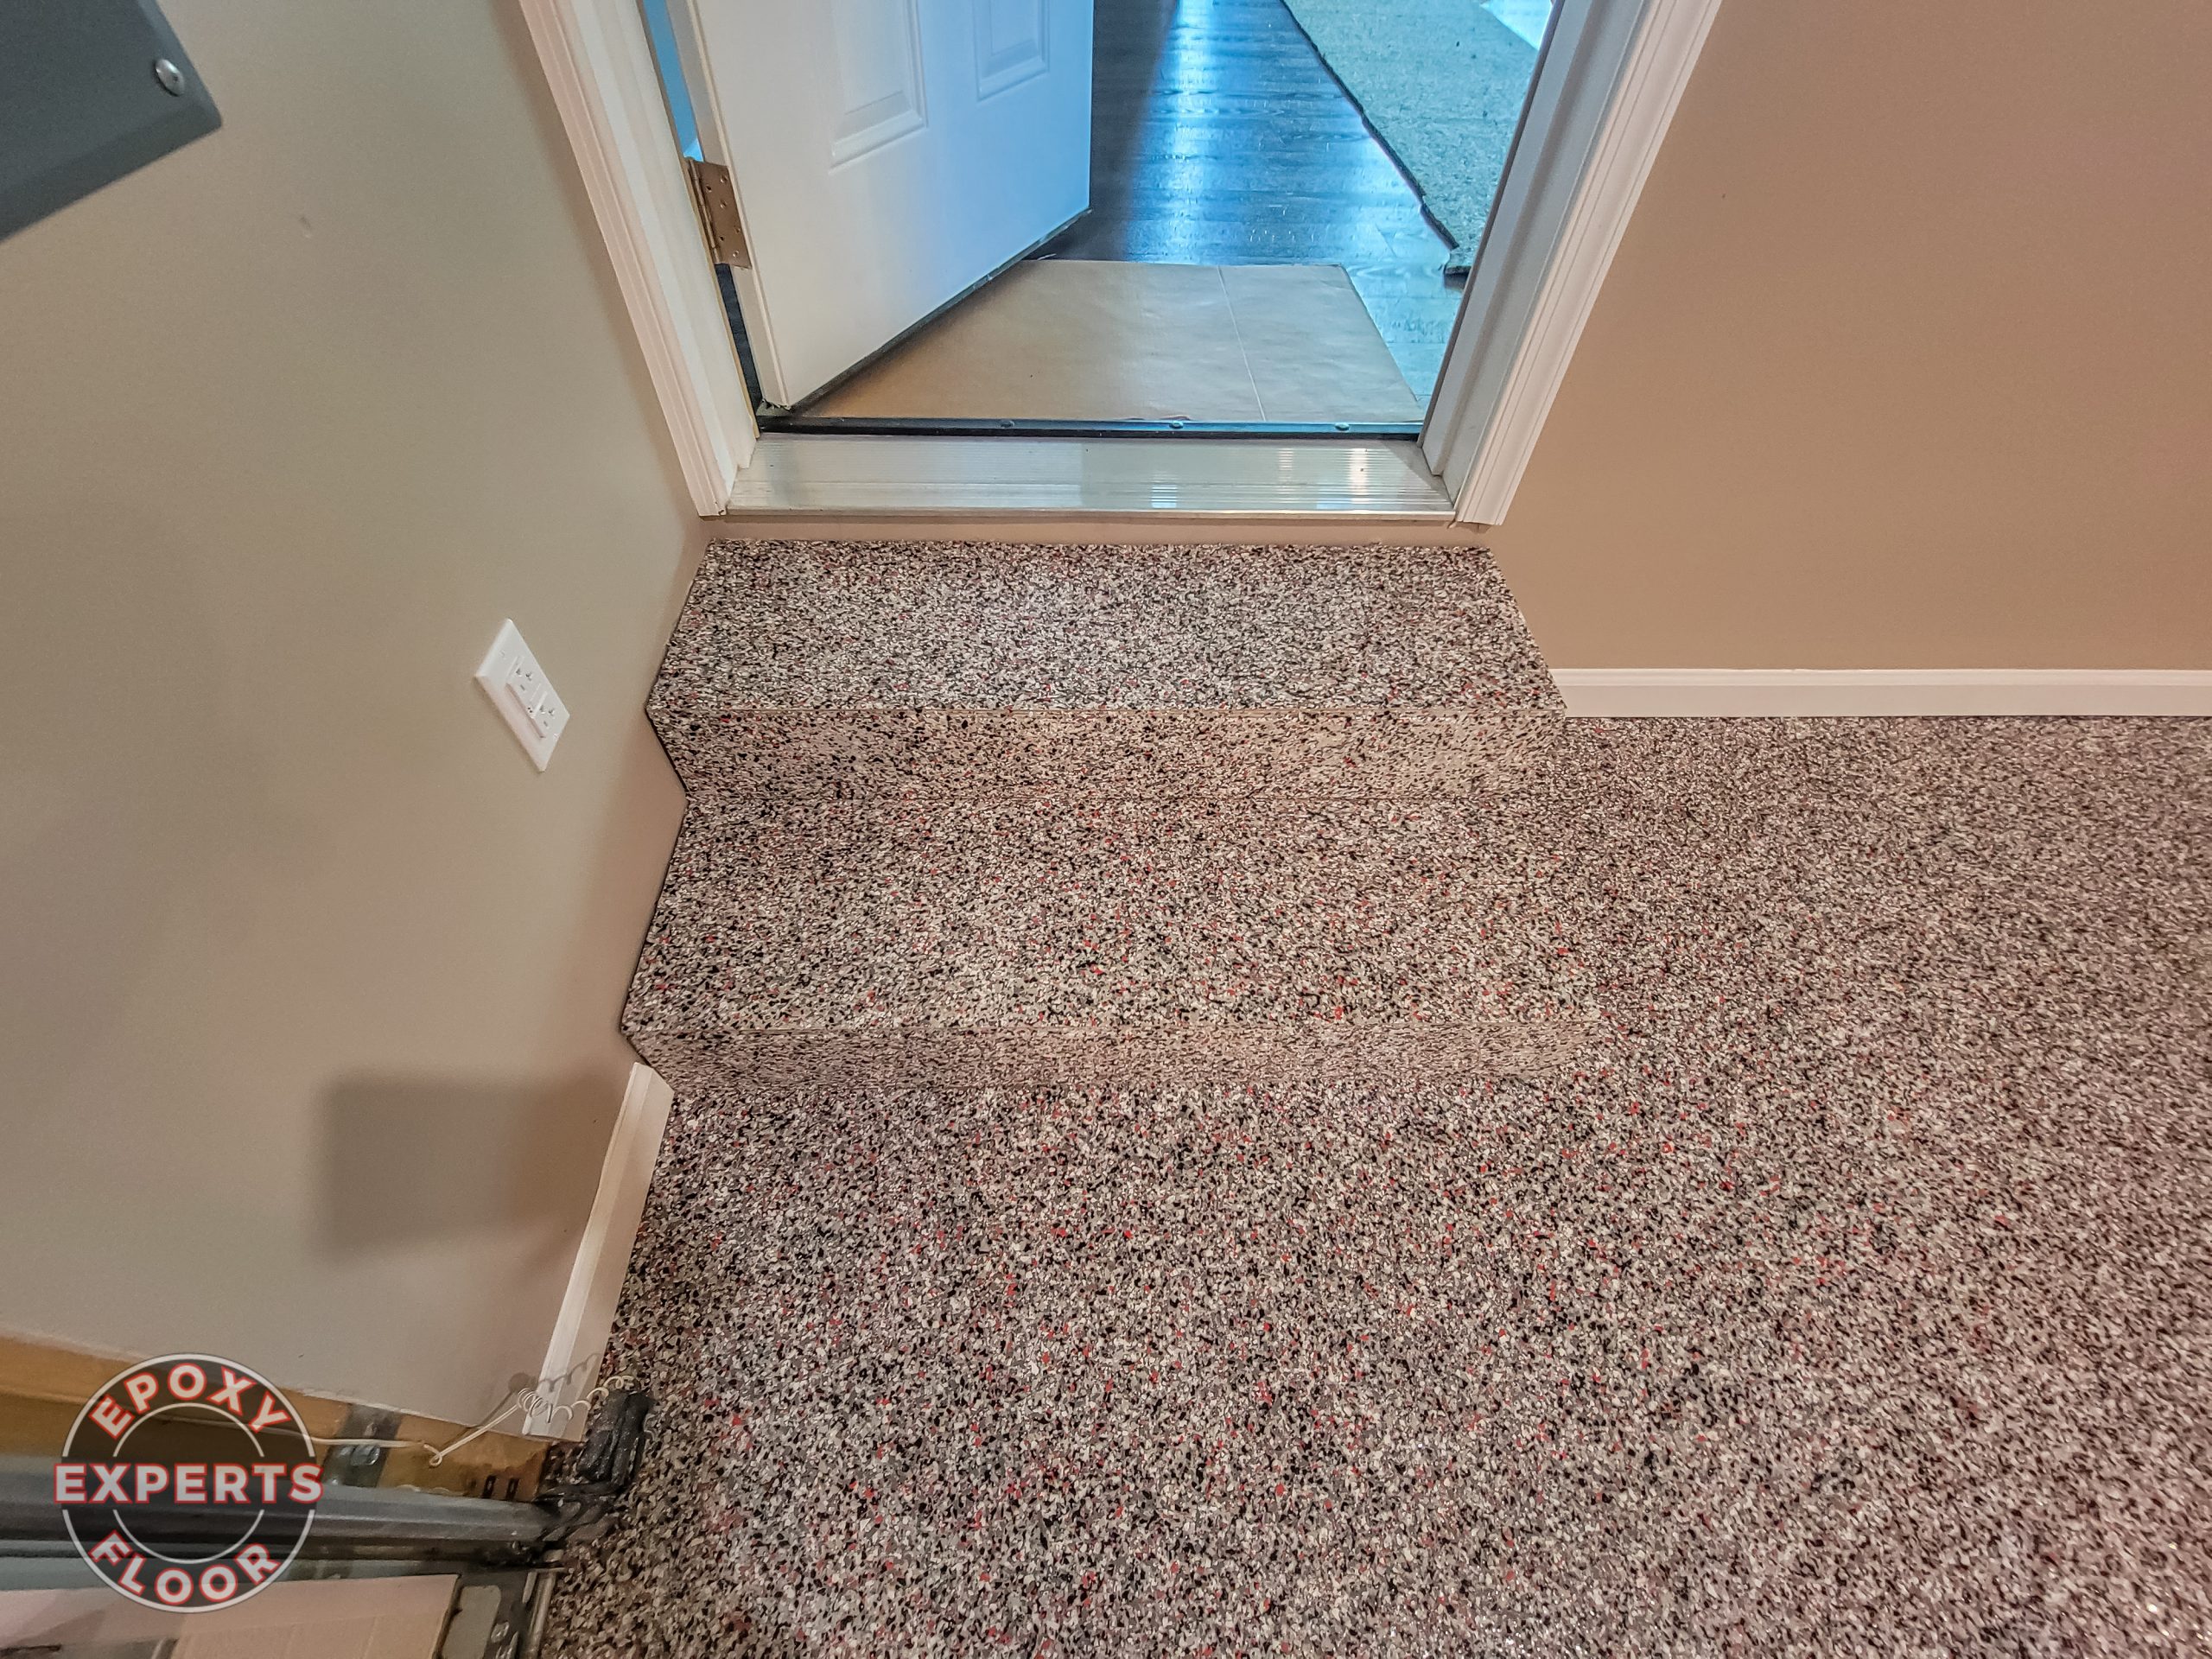 Garage epoxy flooring finish by Epoxy Floor Experts